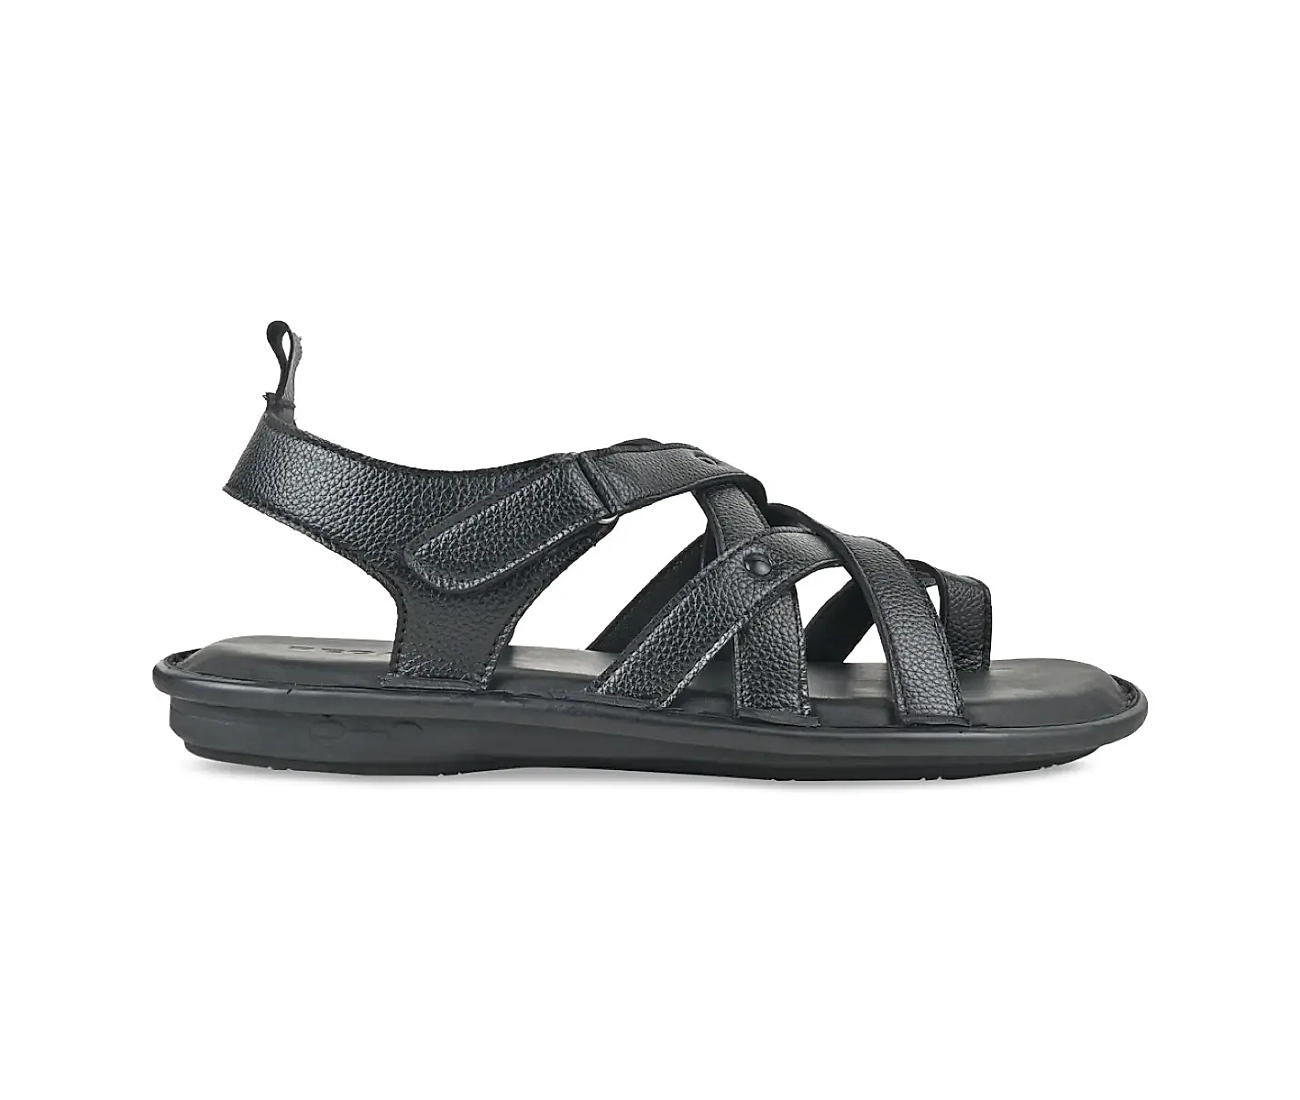 MENS LEATHER SANDALS, Strappy Sandals Men, Summer Shoes zeus - Etsy Denmark